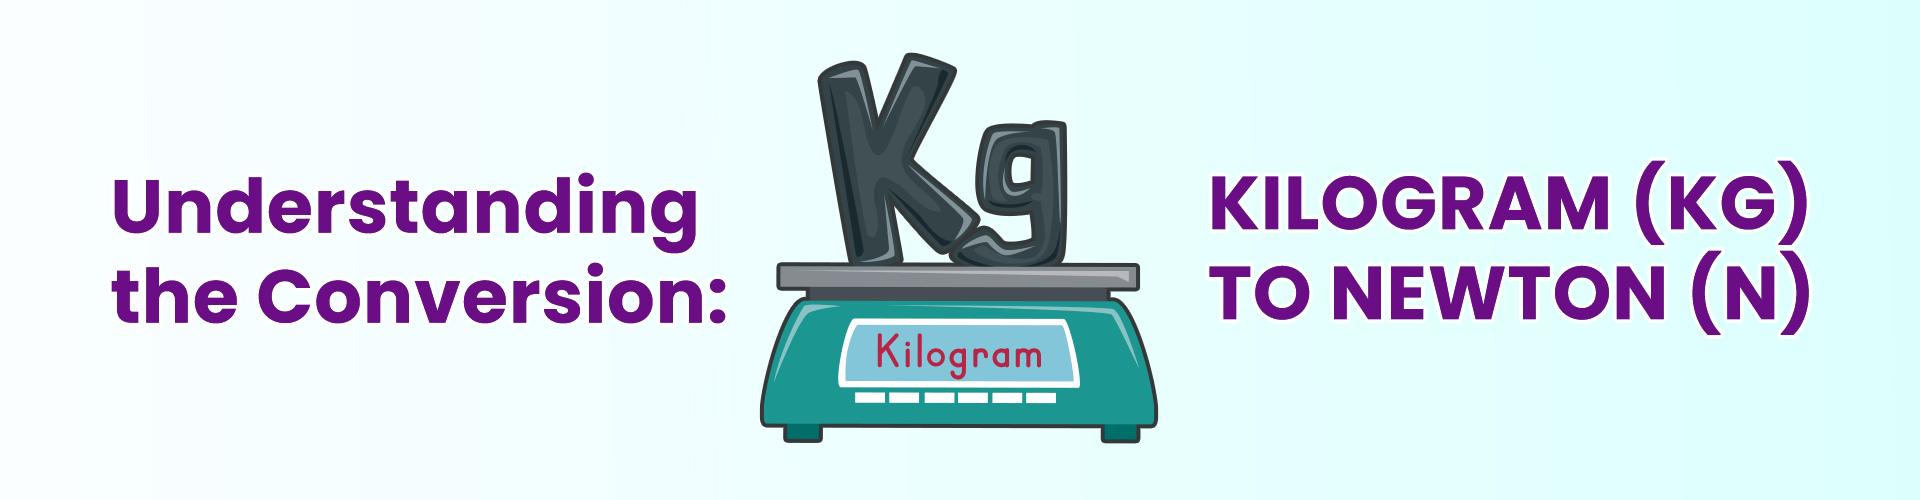 Converting Kilogram to Newton